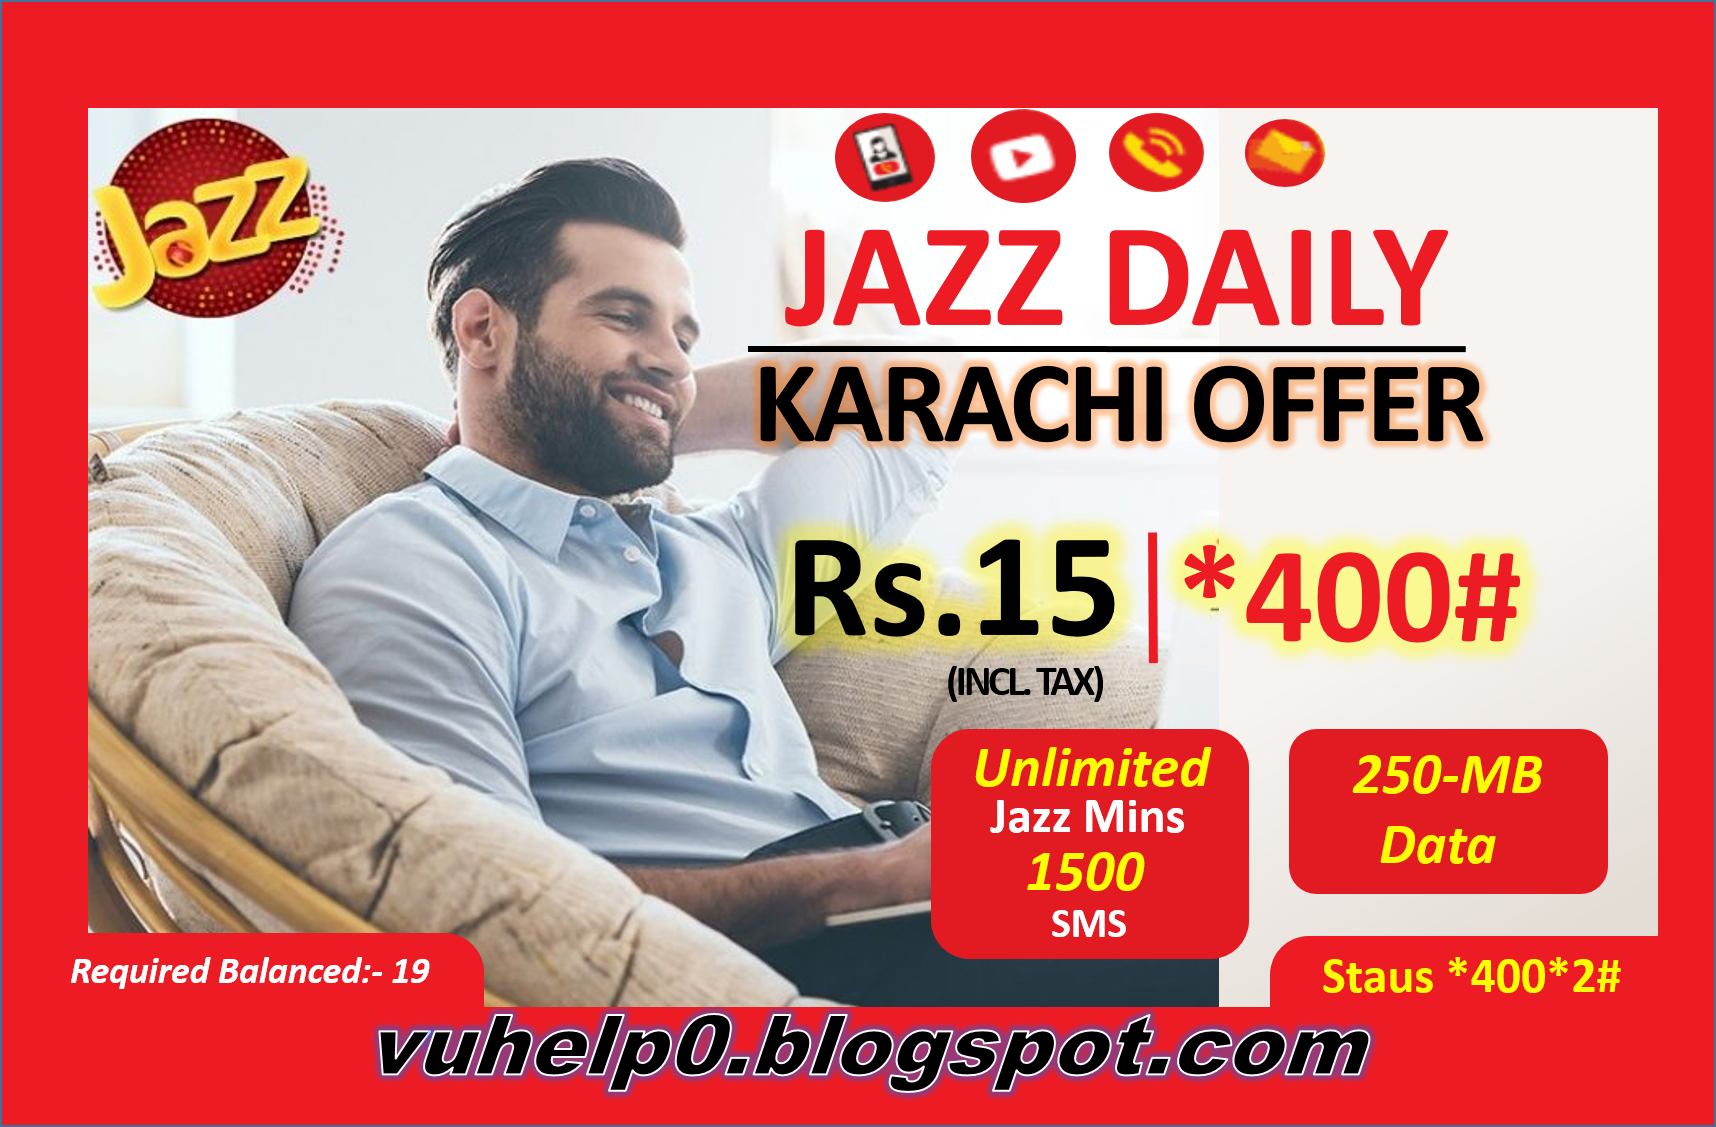 Jazz Daily Karachi Offer | Jazz *400# Offer